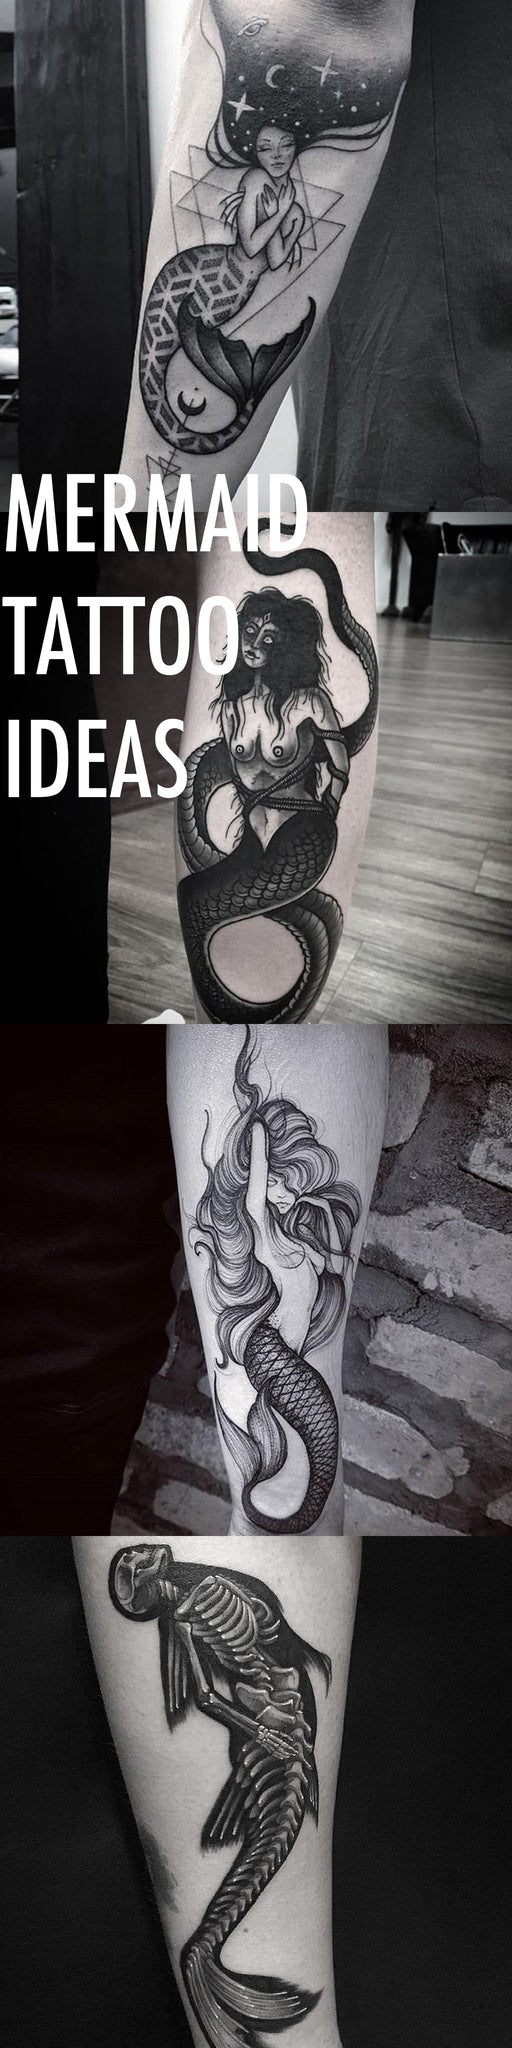 Mermaid Tattoo Ideas at MyBodiArt.com - Traditional Geometric Black and White Arm Sleeve